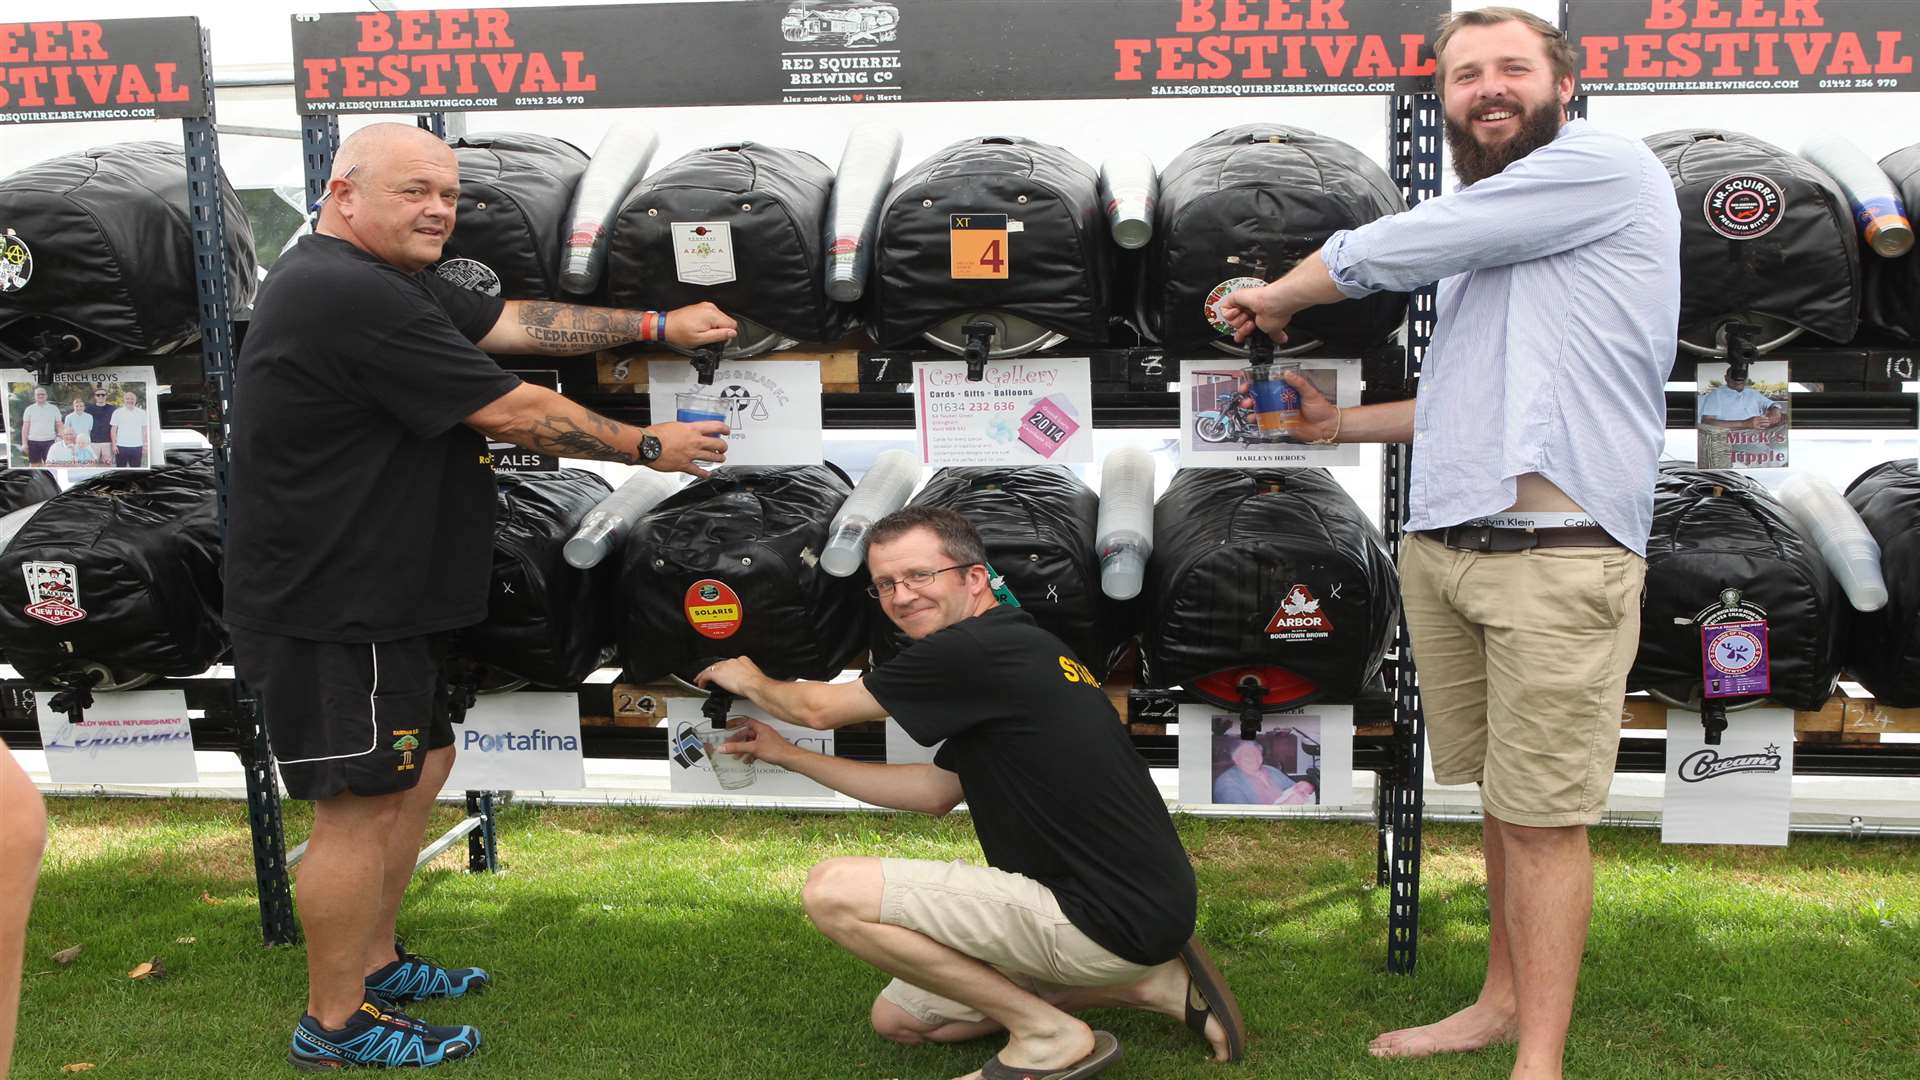 The beer festival at Rainham Cricket Club raised £10,000